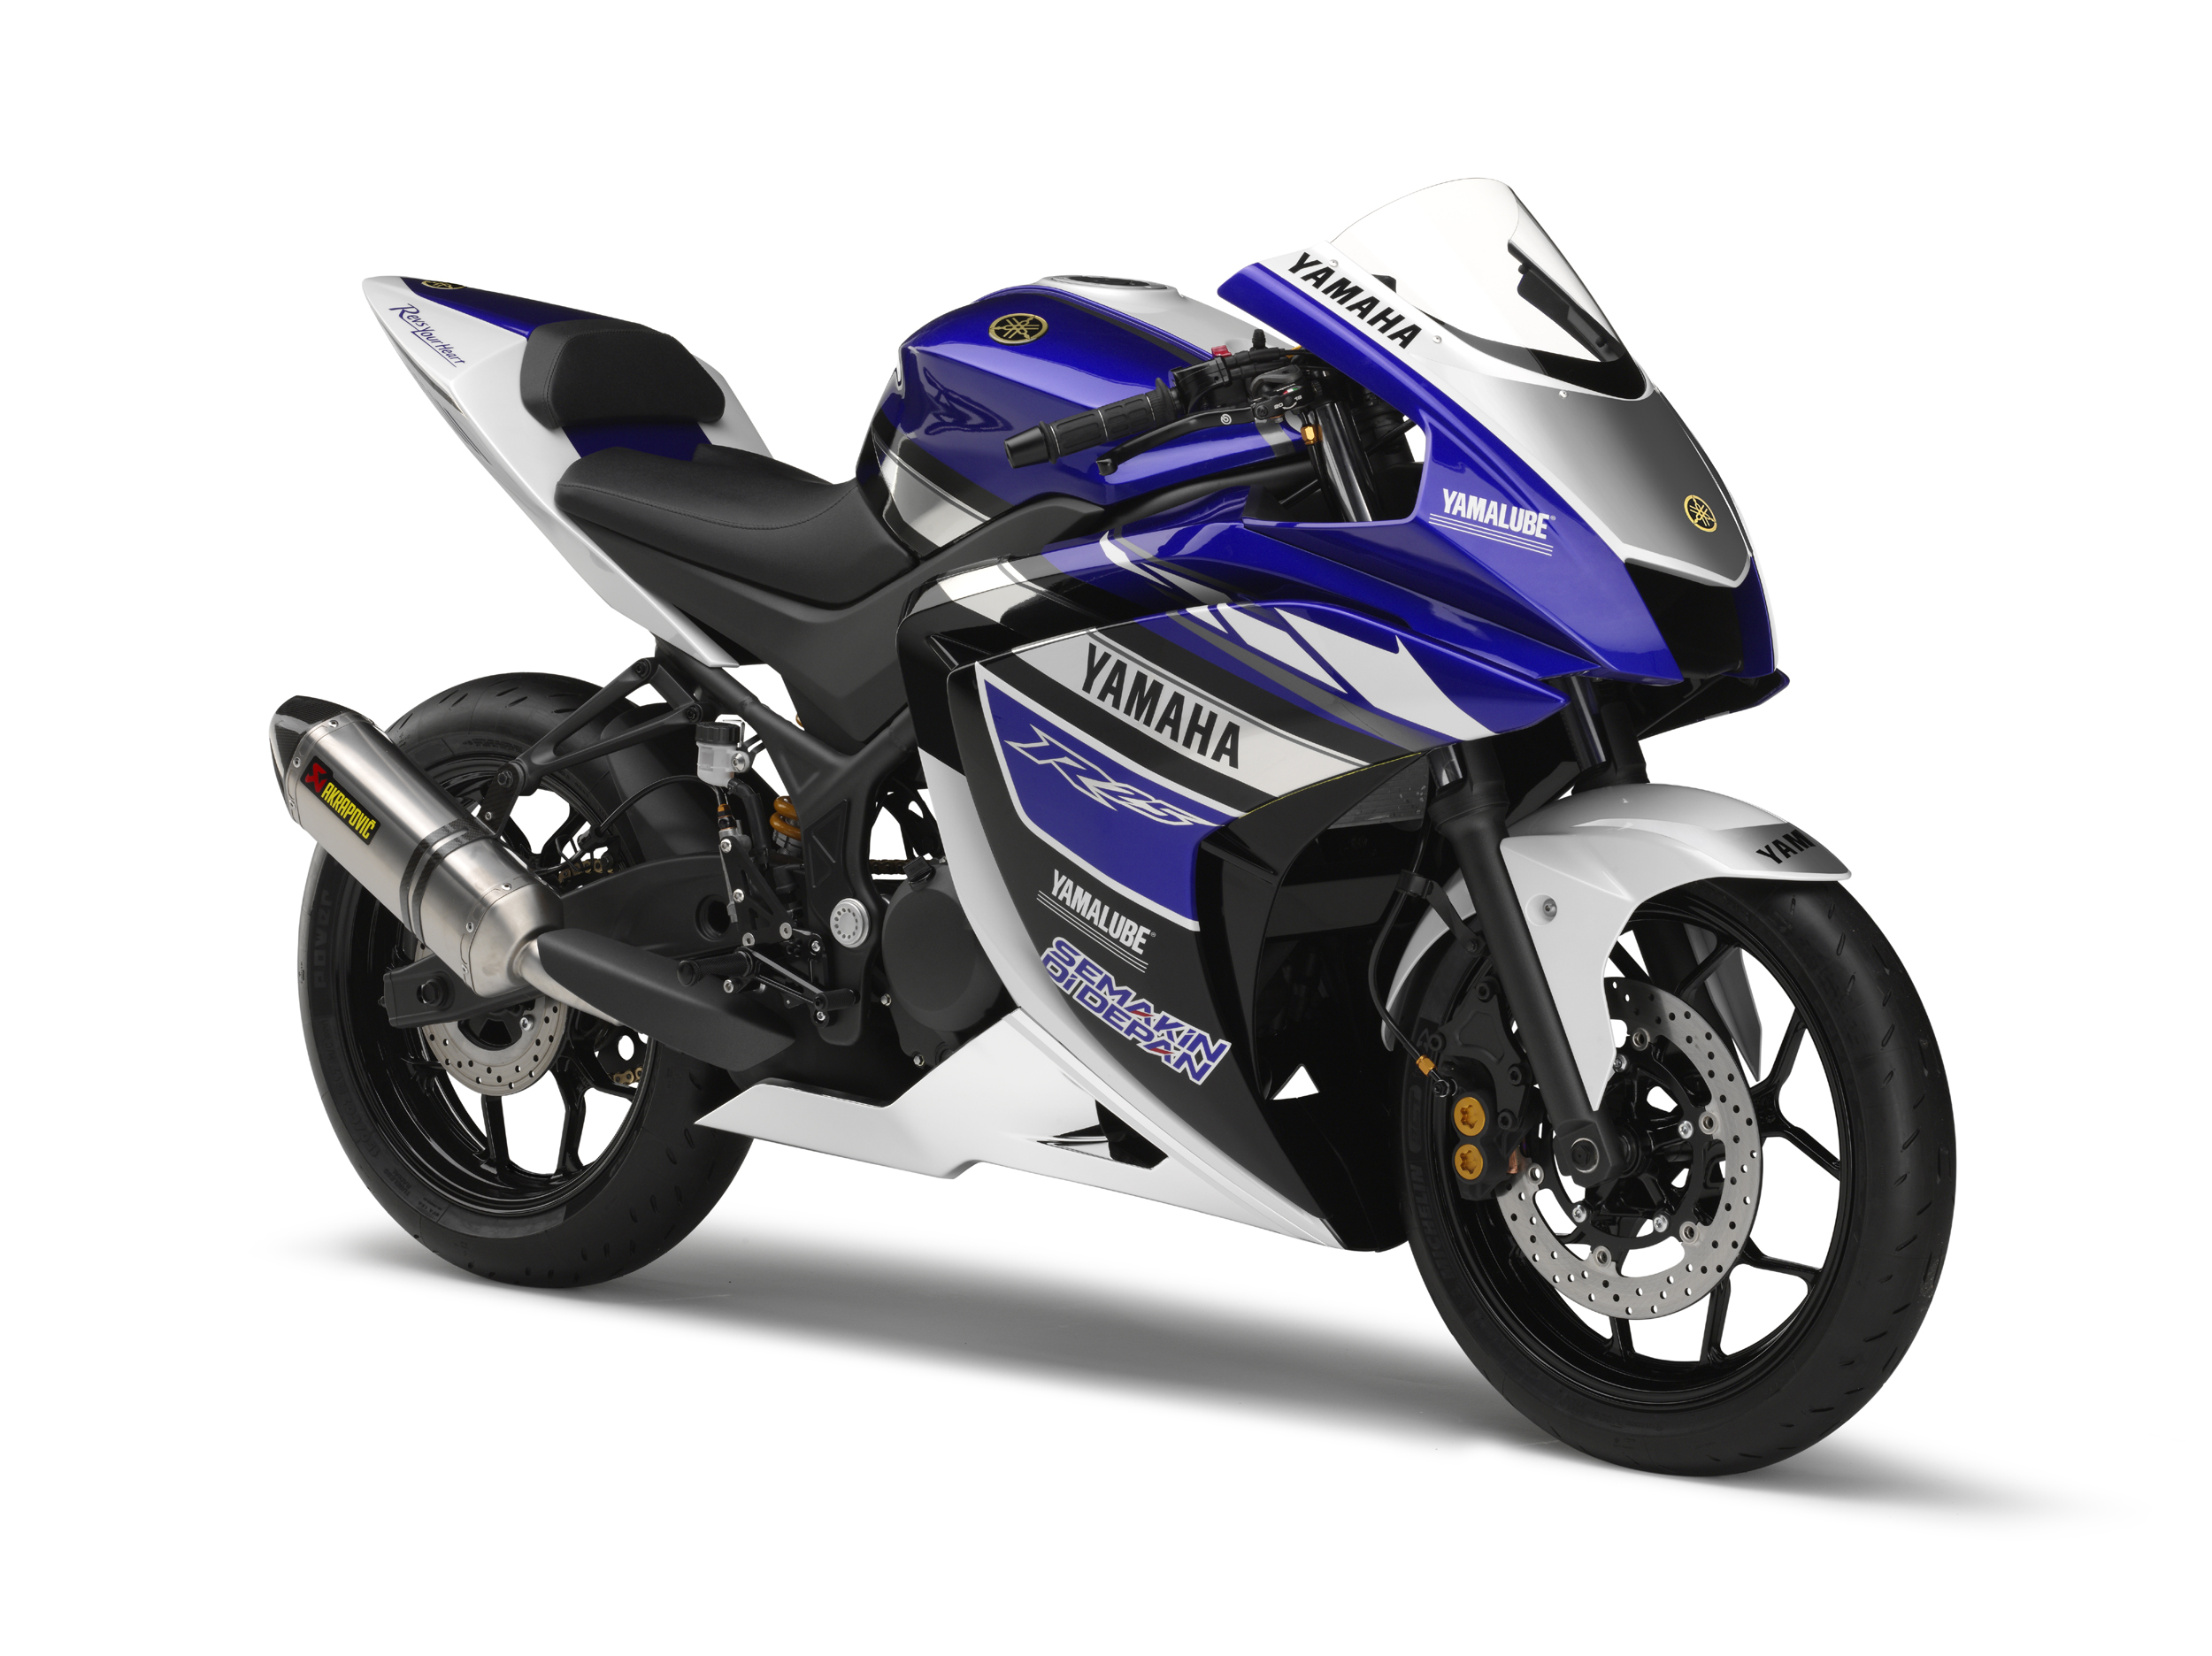 Yamaha R25/R3 launch next week?